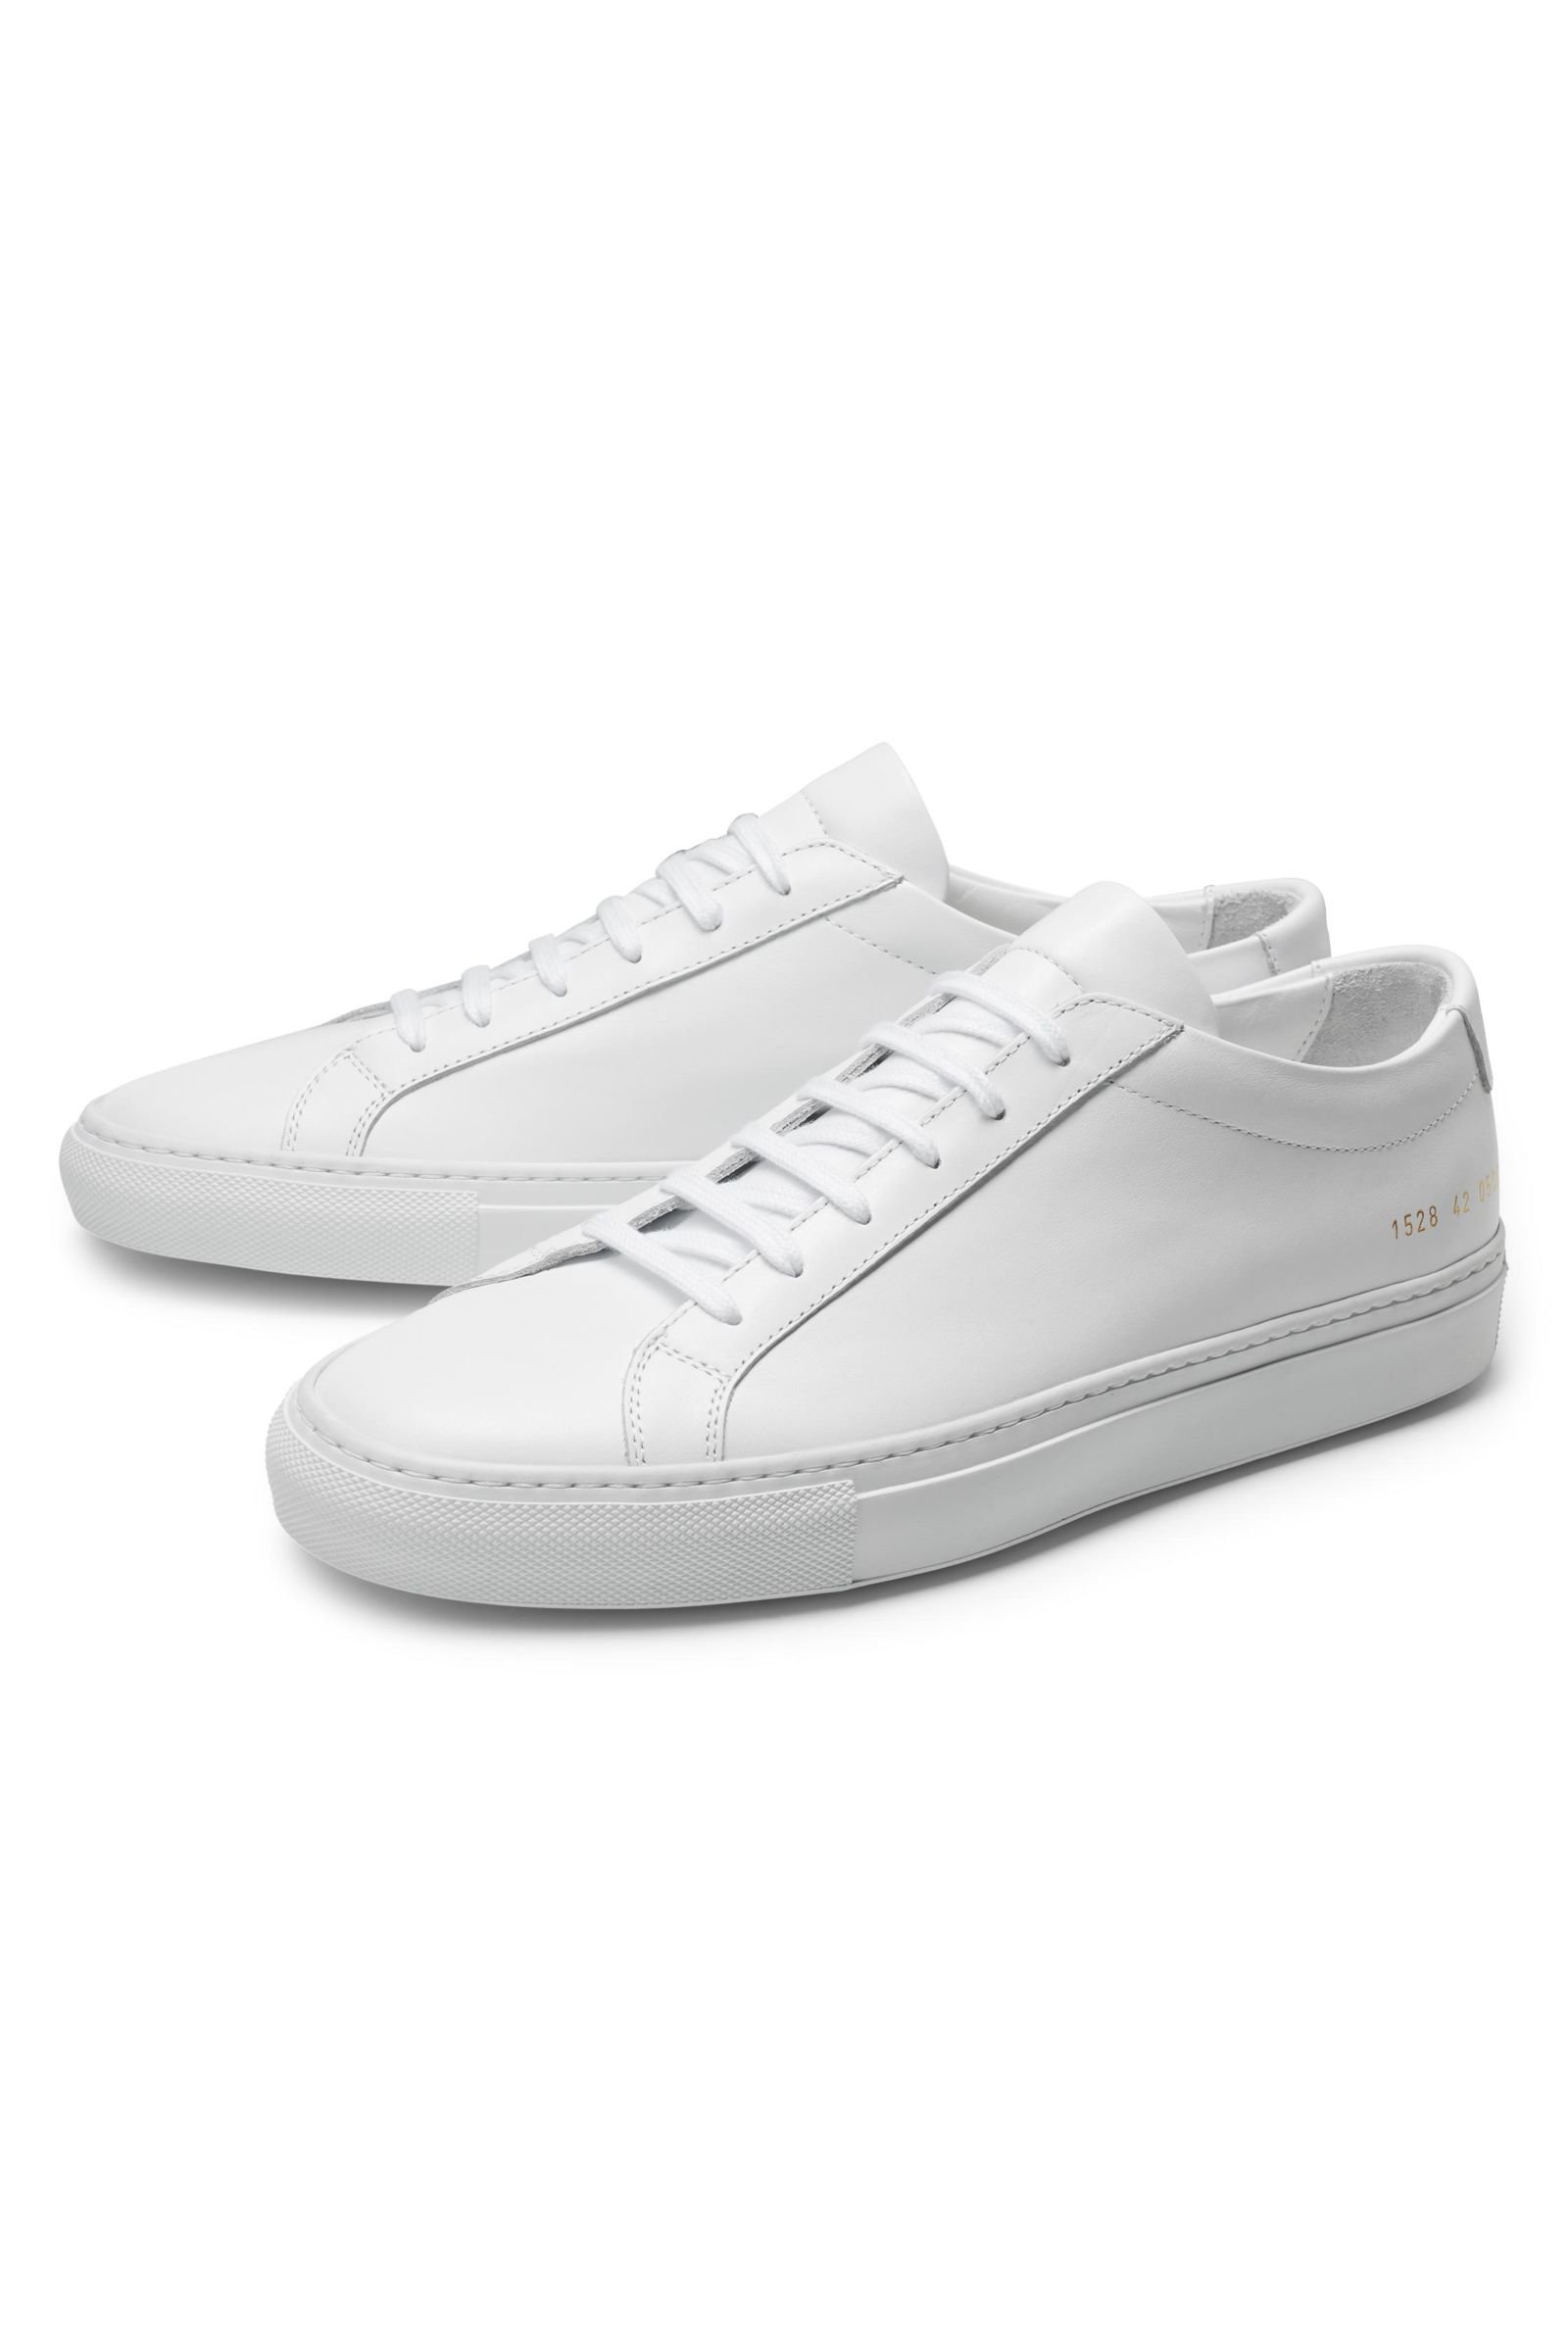 ‘Original Achilles’ sneakers in white